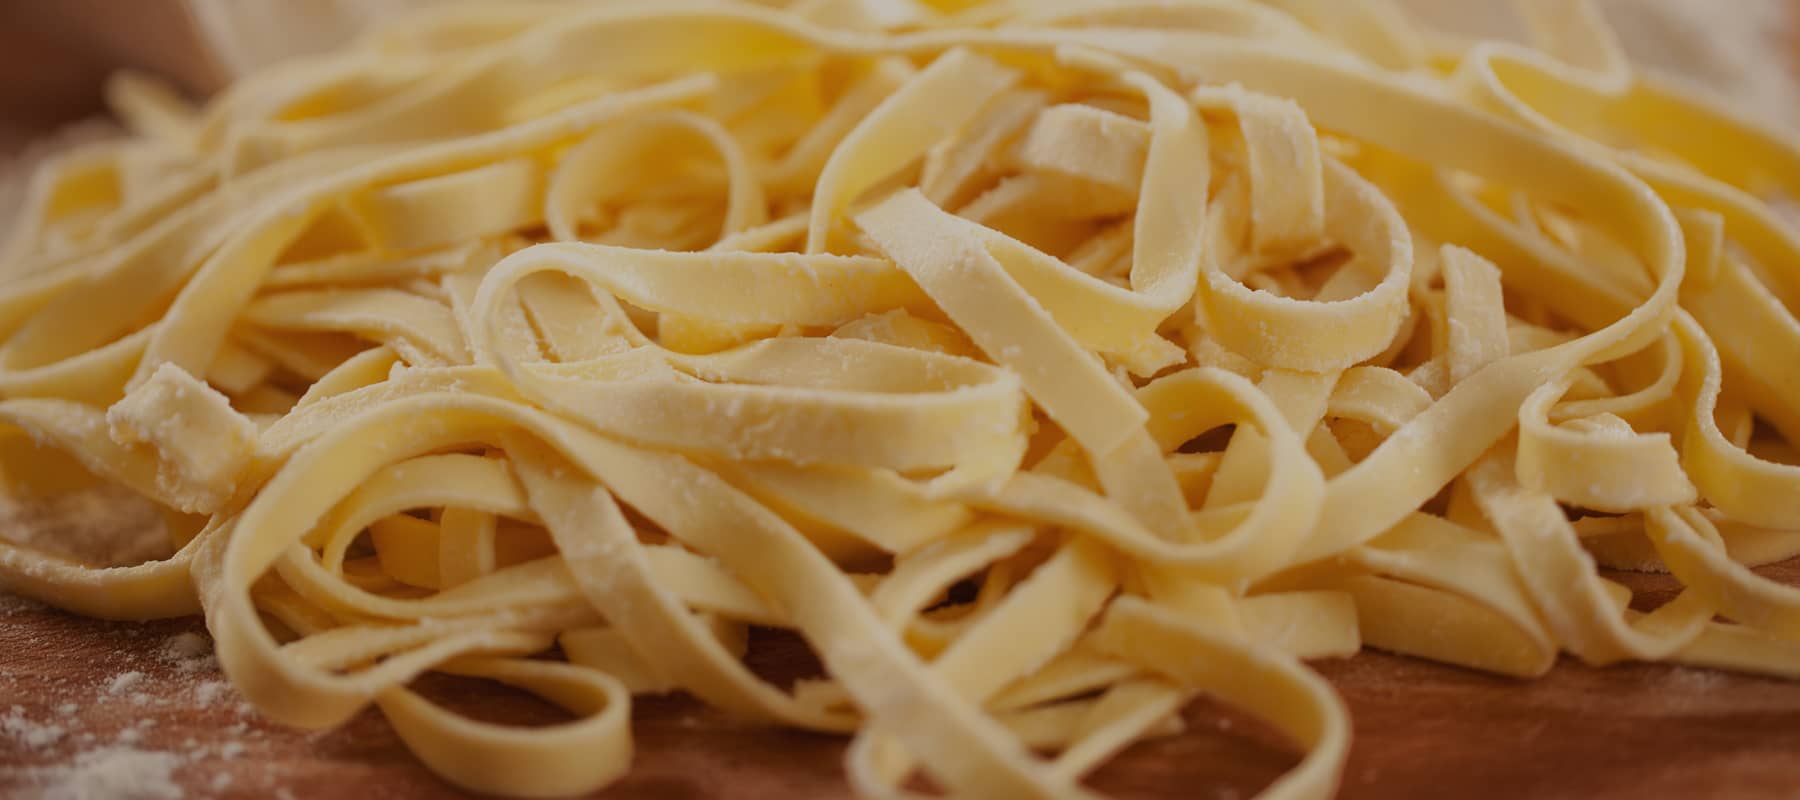 Fresh fettuccine pasta made with durum semolina